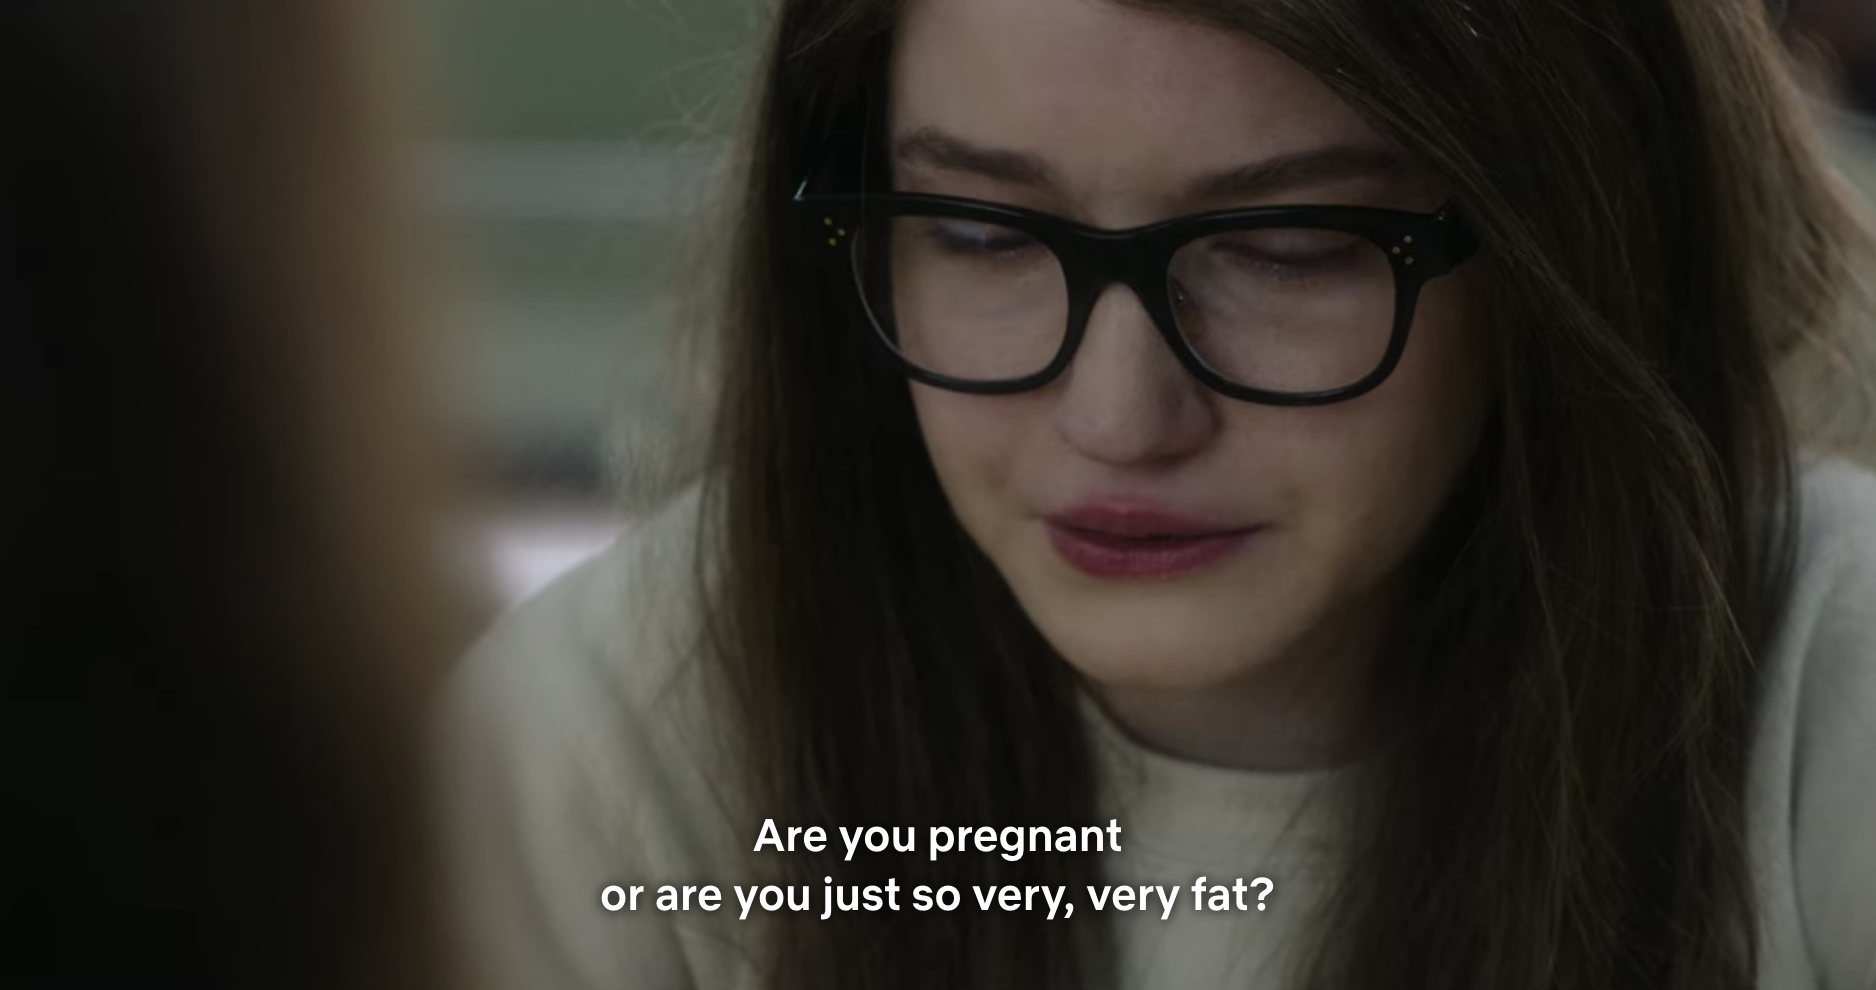 Anna asking about Vivian&#x27;s pregnancy status